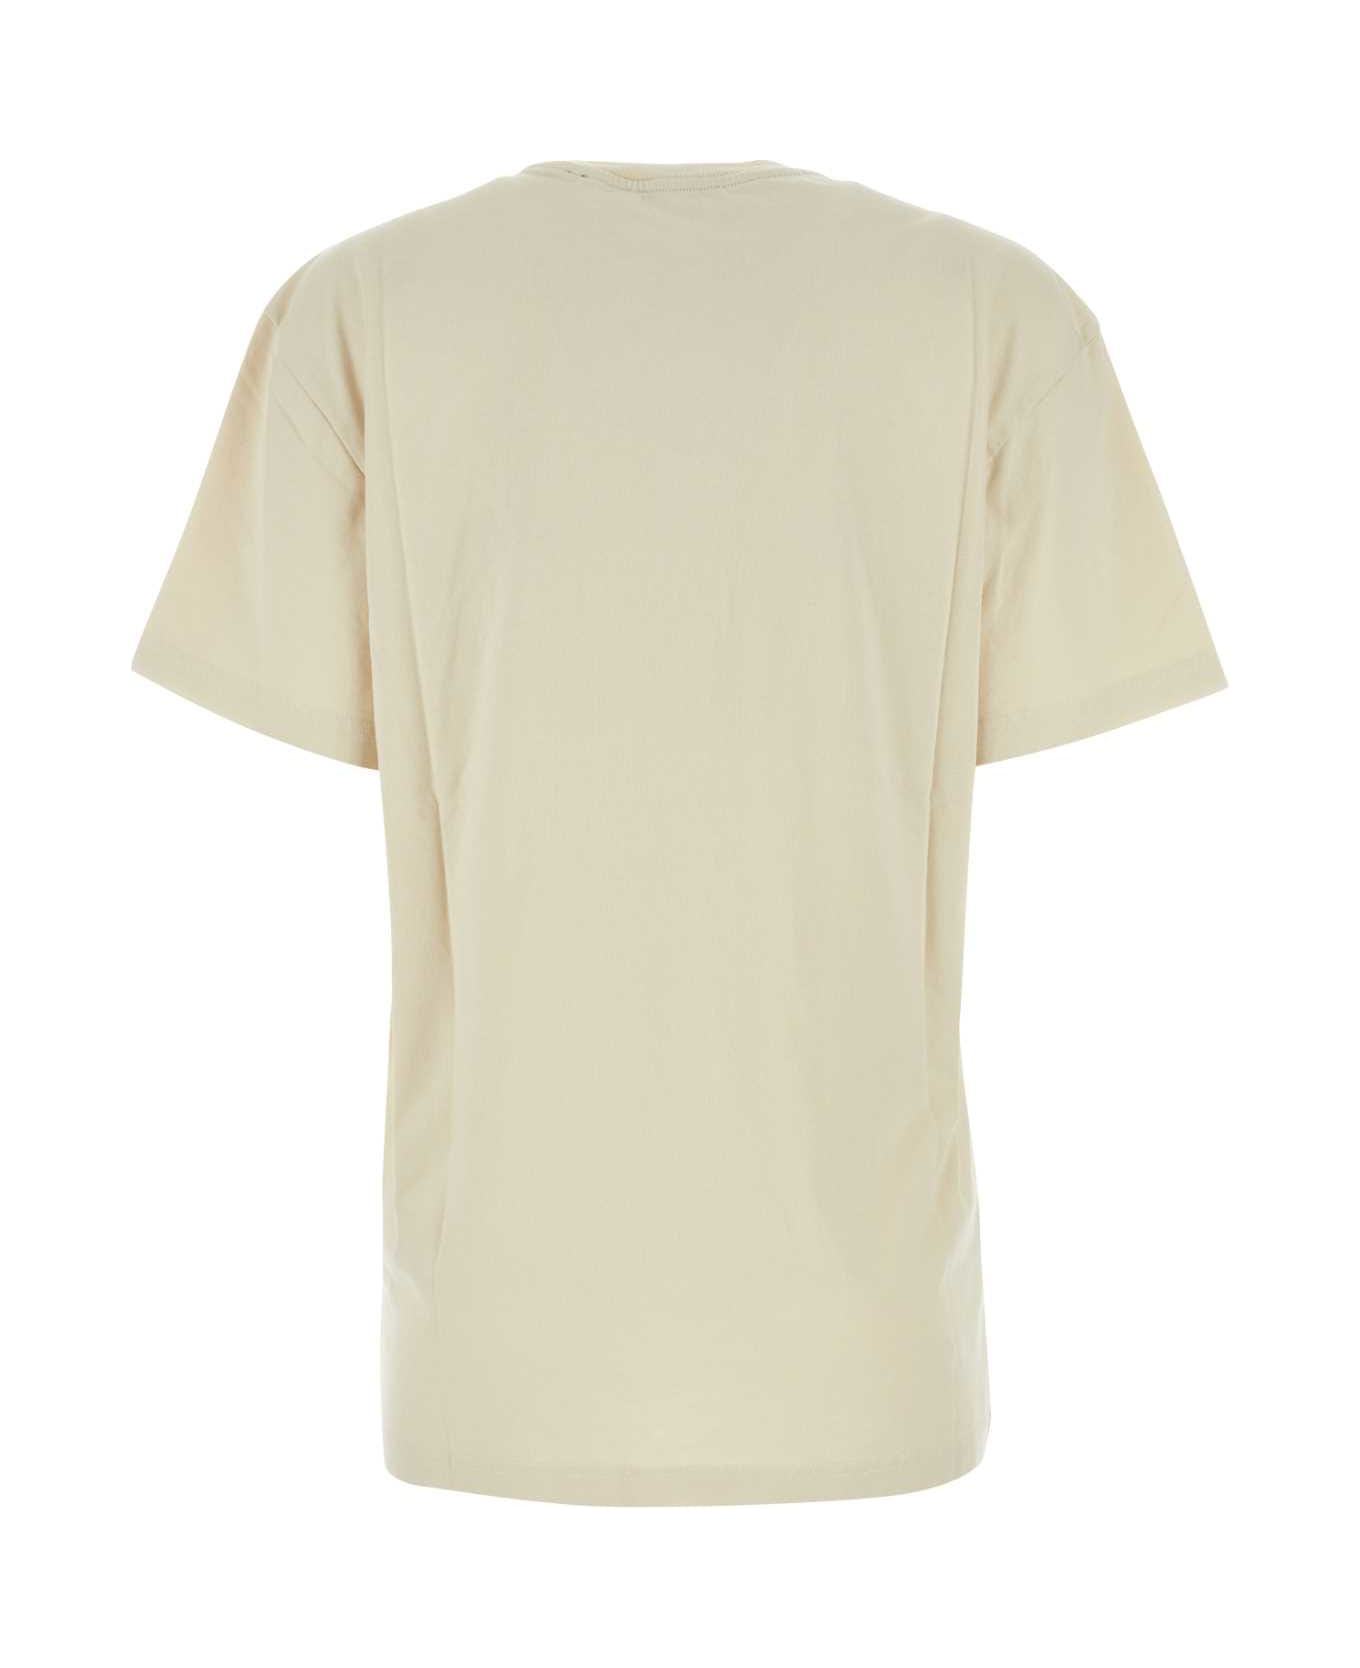 J.W. Anderson Sand Cotton T-shirt - BEIGE Tシャツ